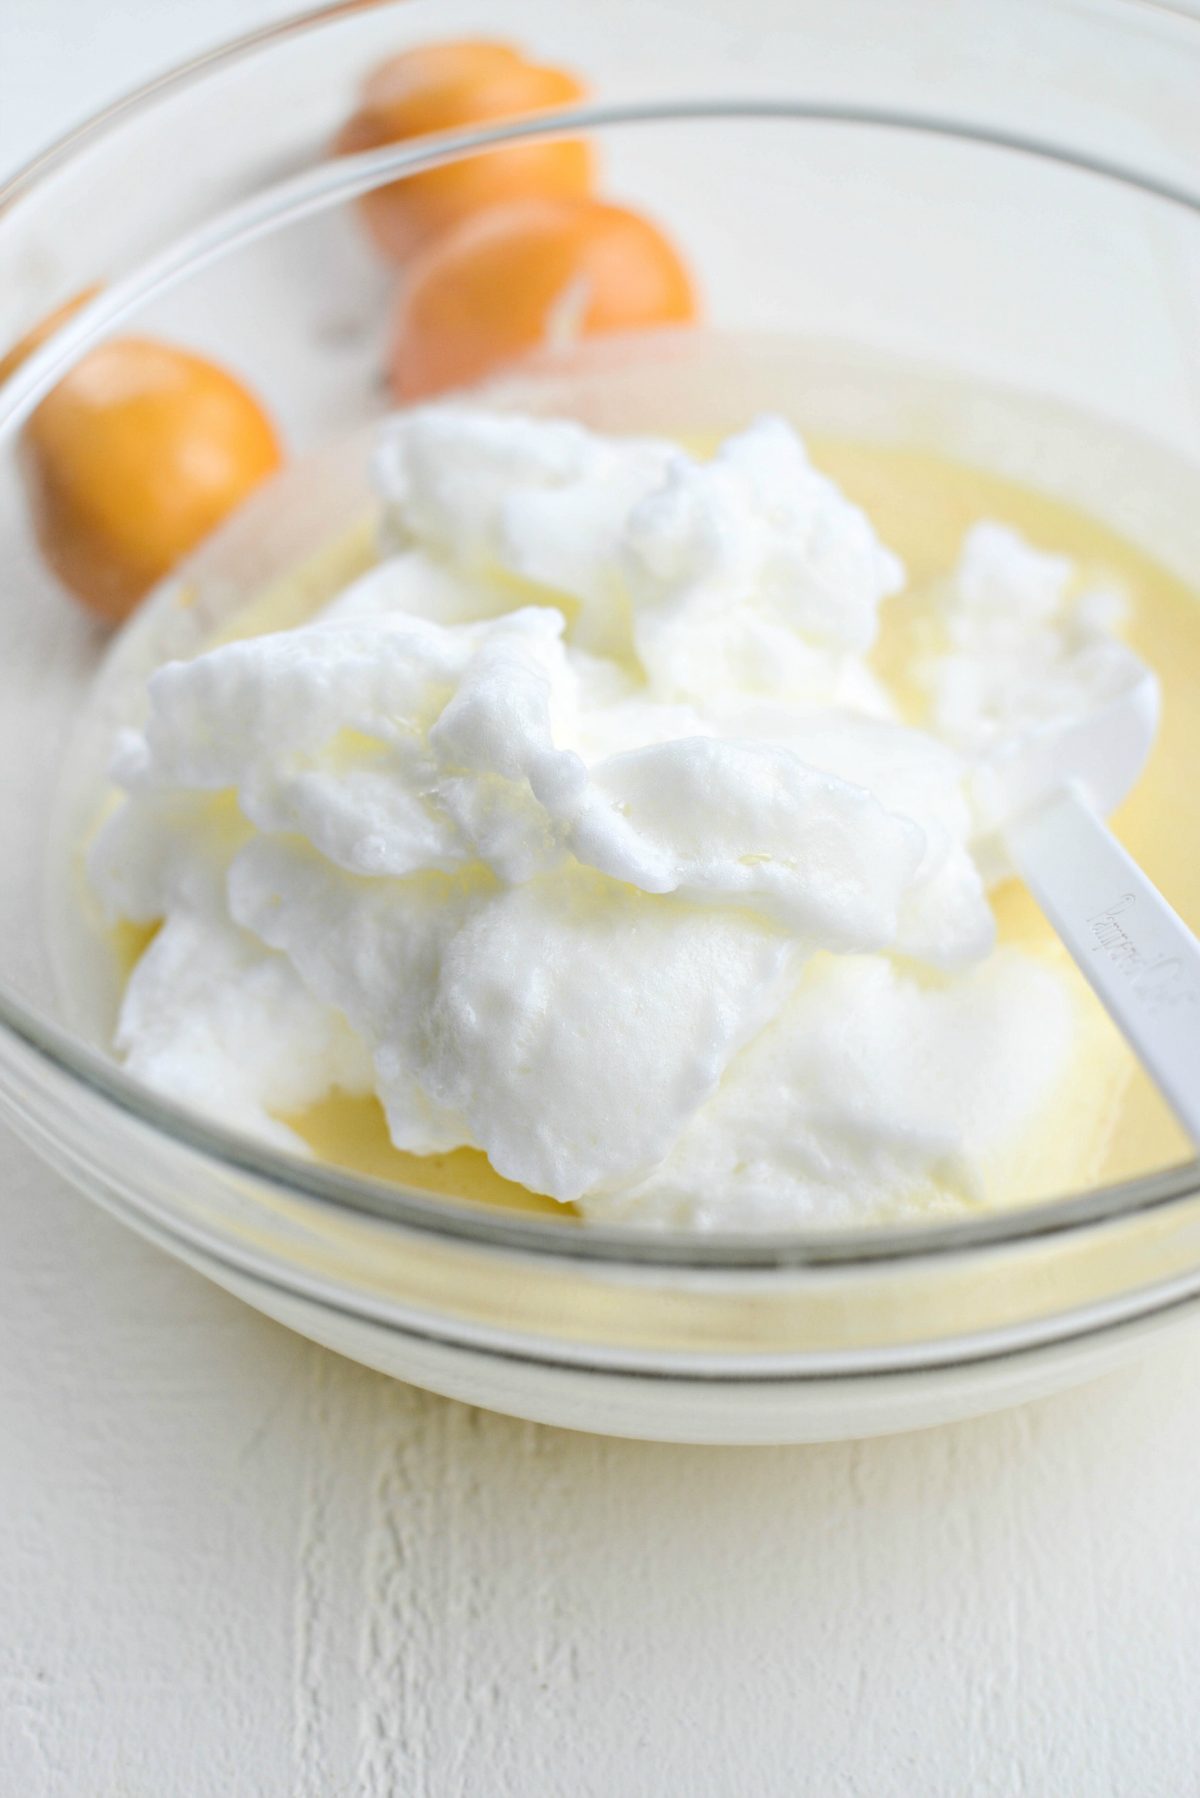 add egg whites to egg mixture